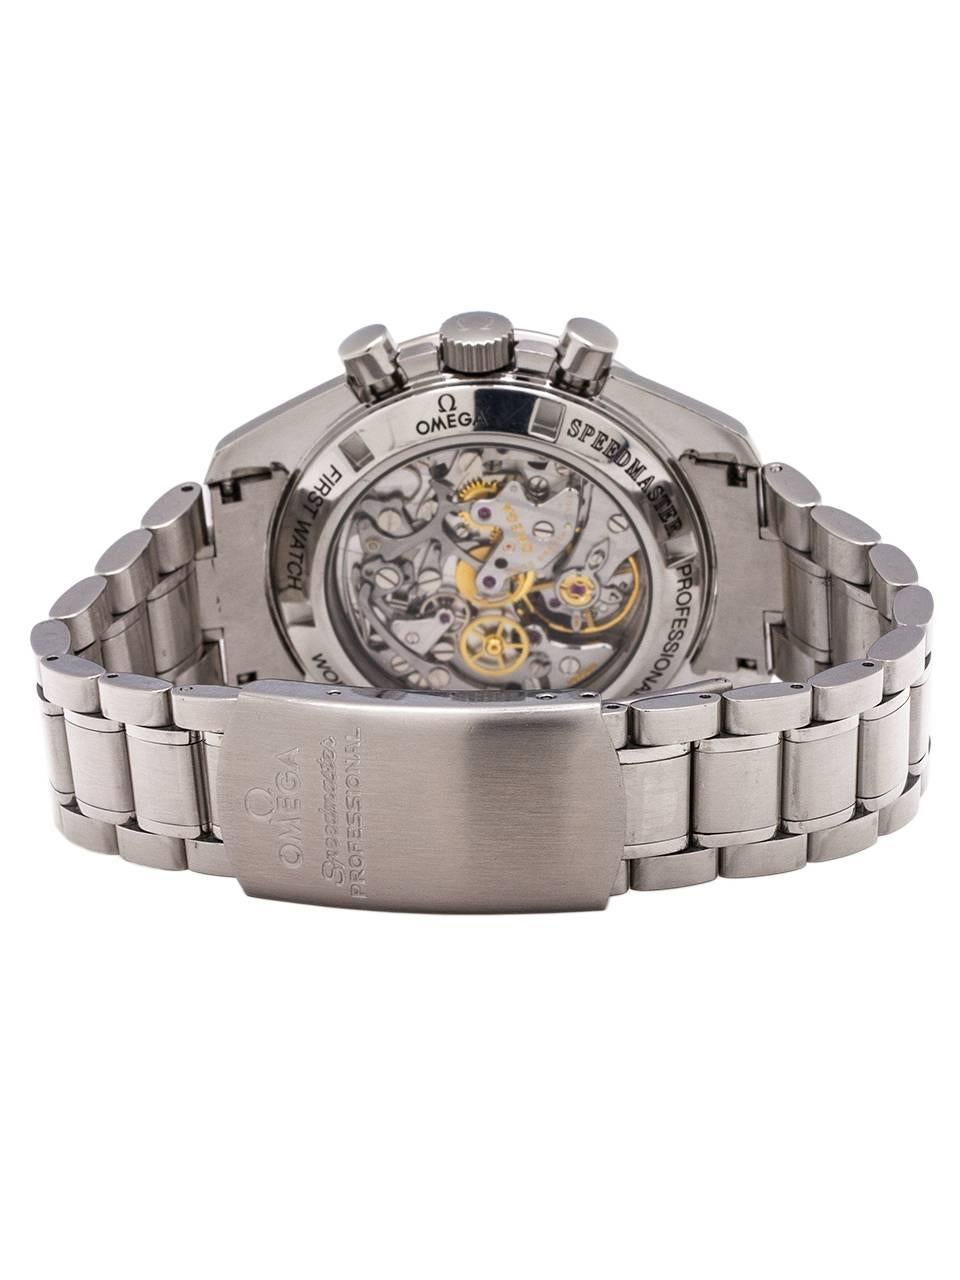 Men's Omega stainless steel Speedmaster Professional manual wristwatch, c 1997